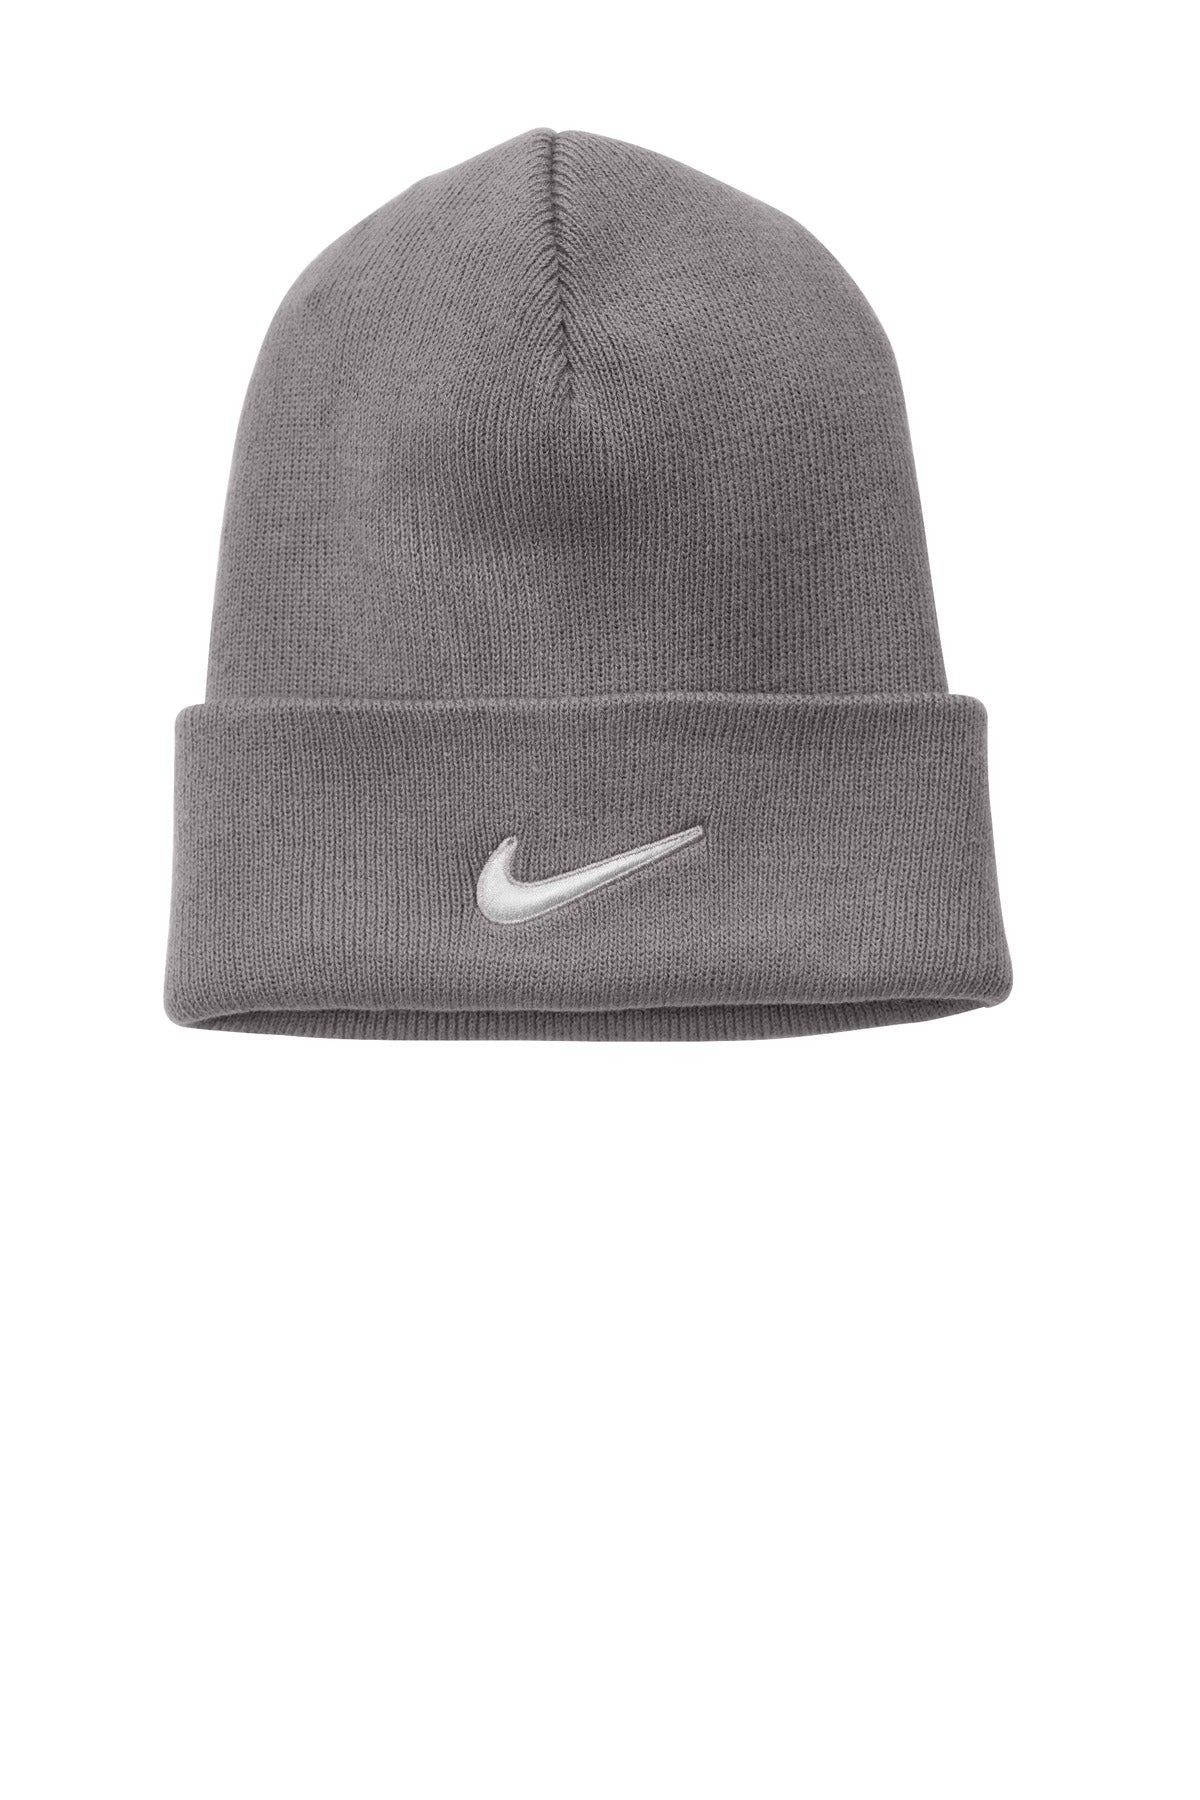 Caps Medium Grey OSFA Nike